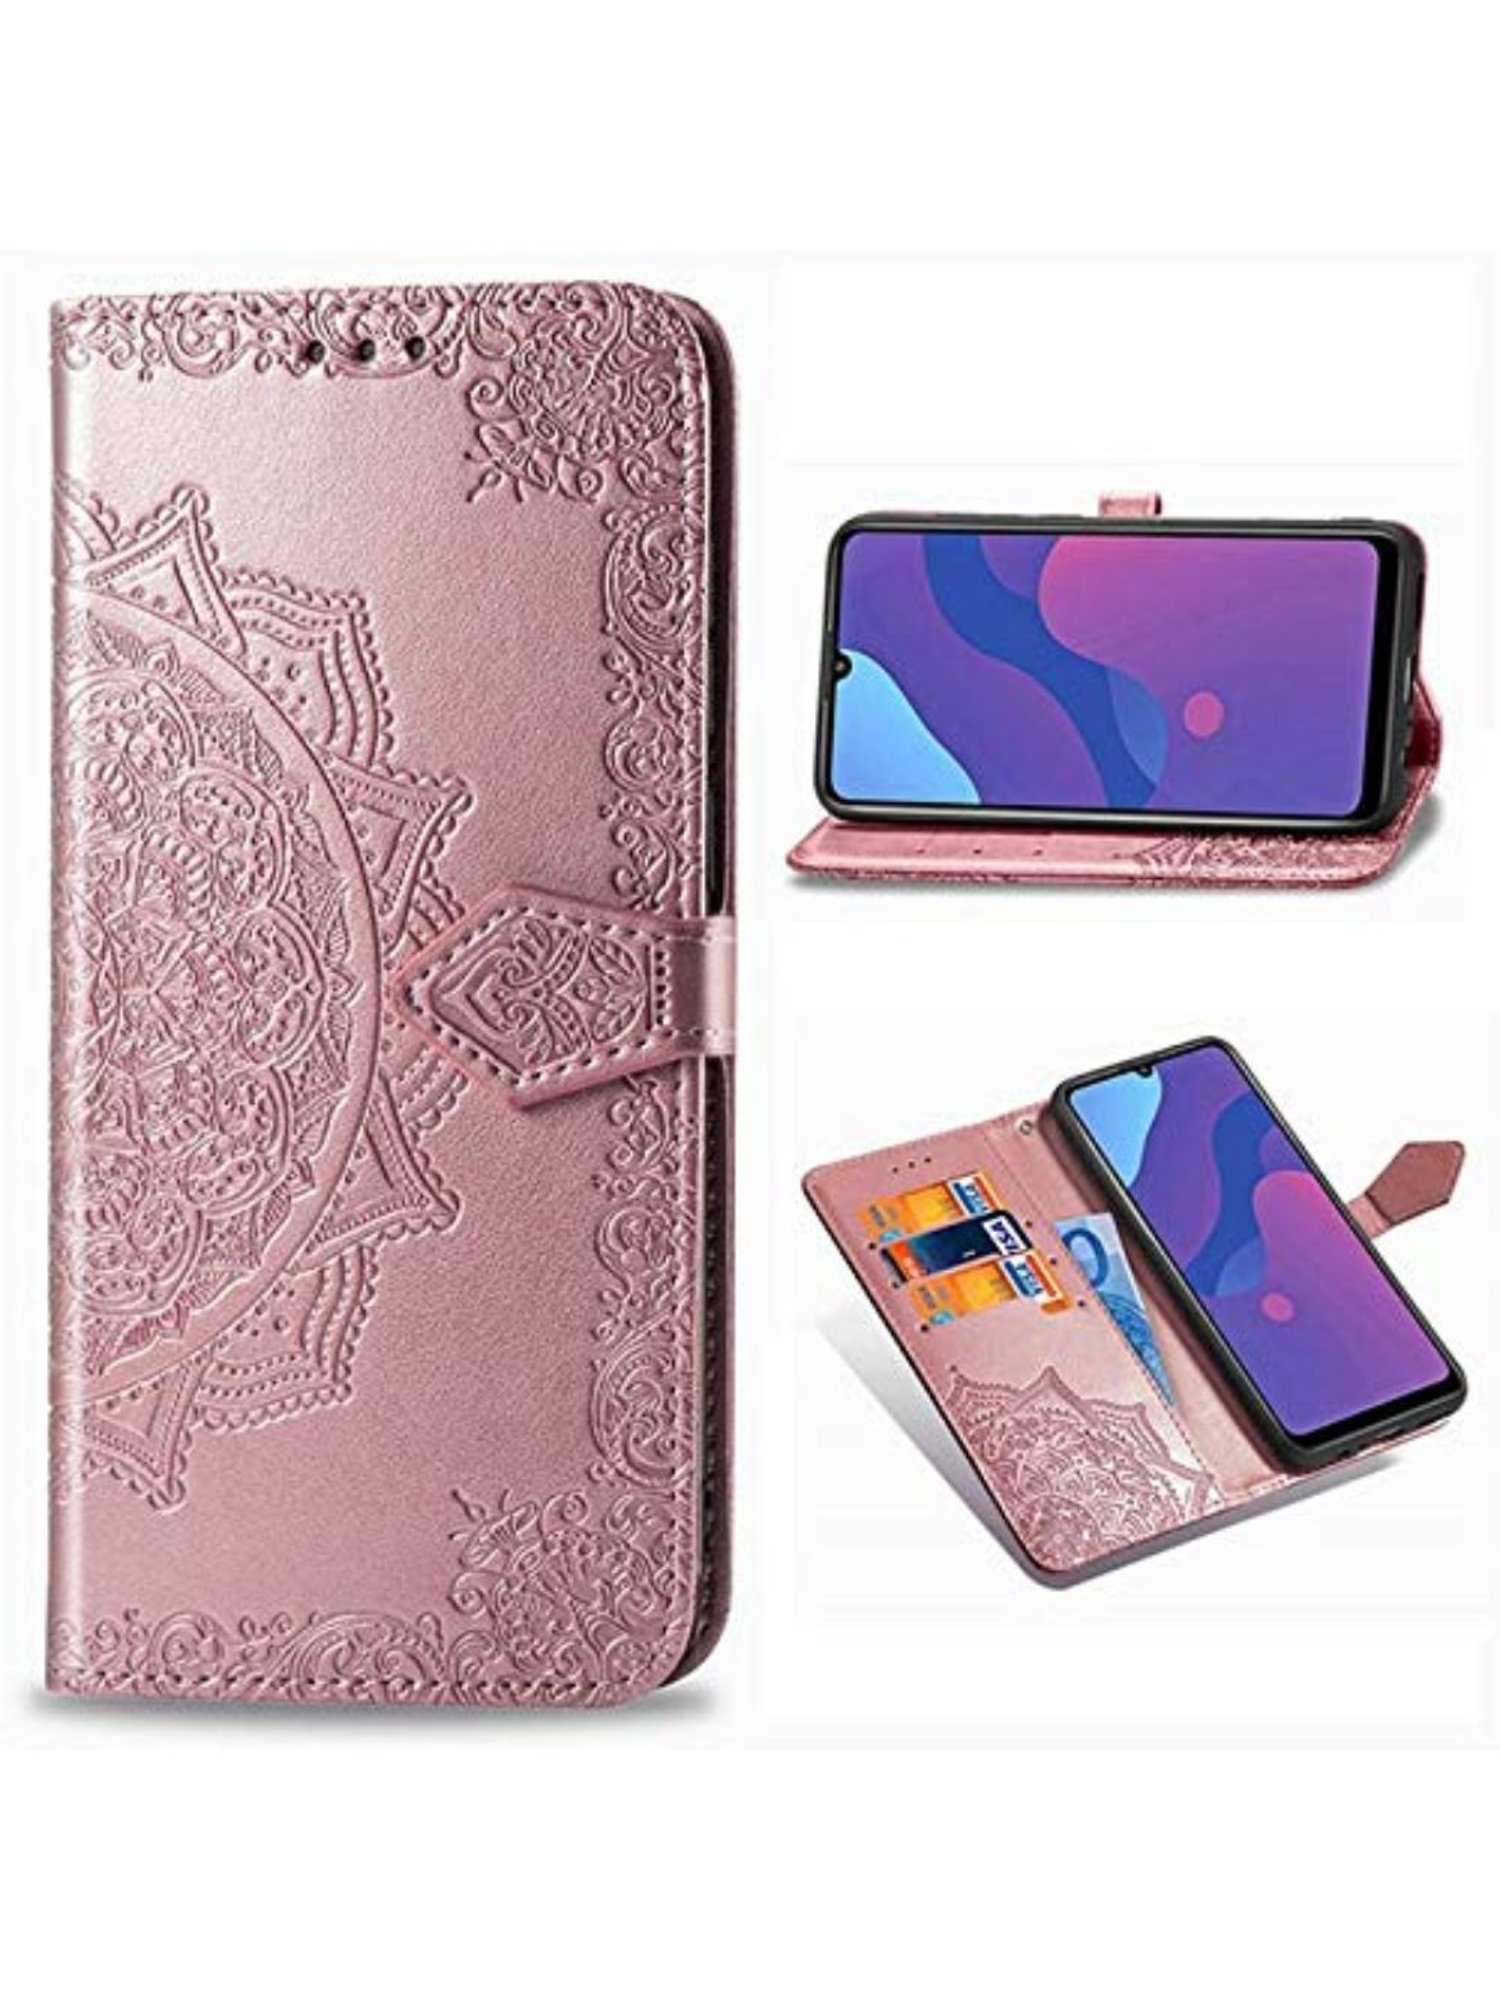 Samsung Purse Wallet Case Cover